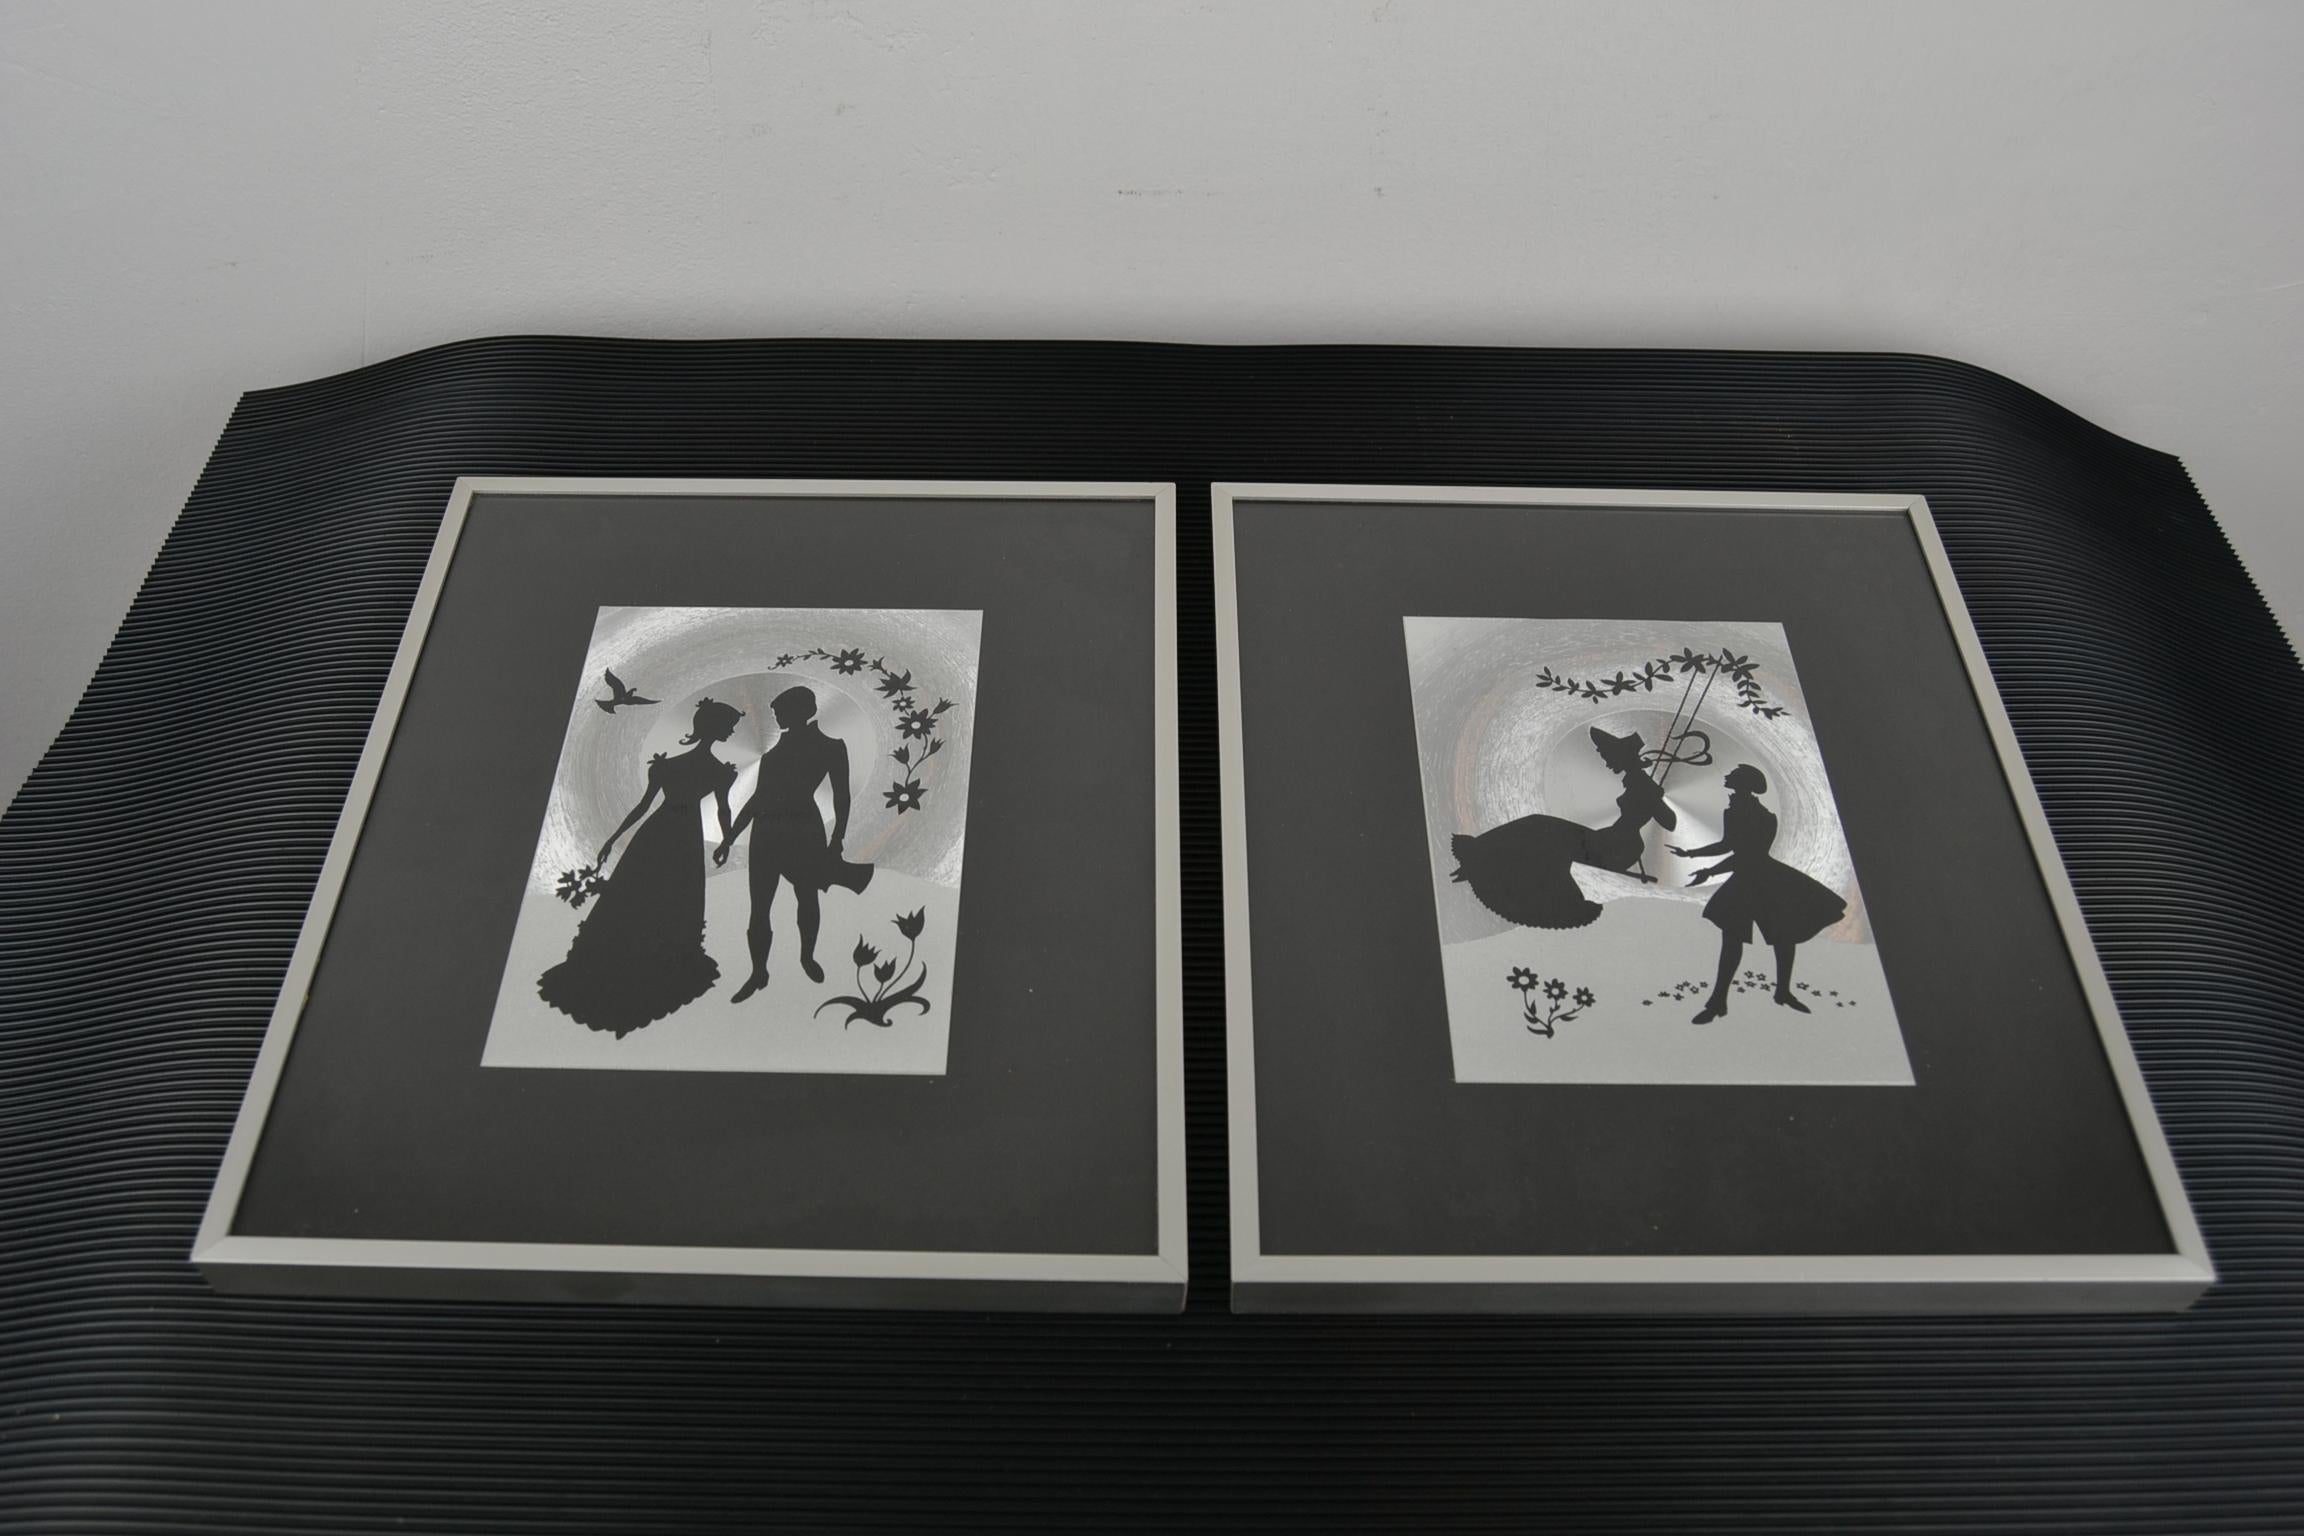 European Pair of Framed Metallic Print Wall Art with Romantic Couple, 1960s